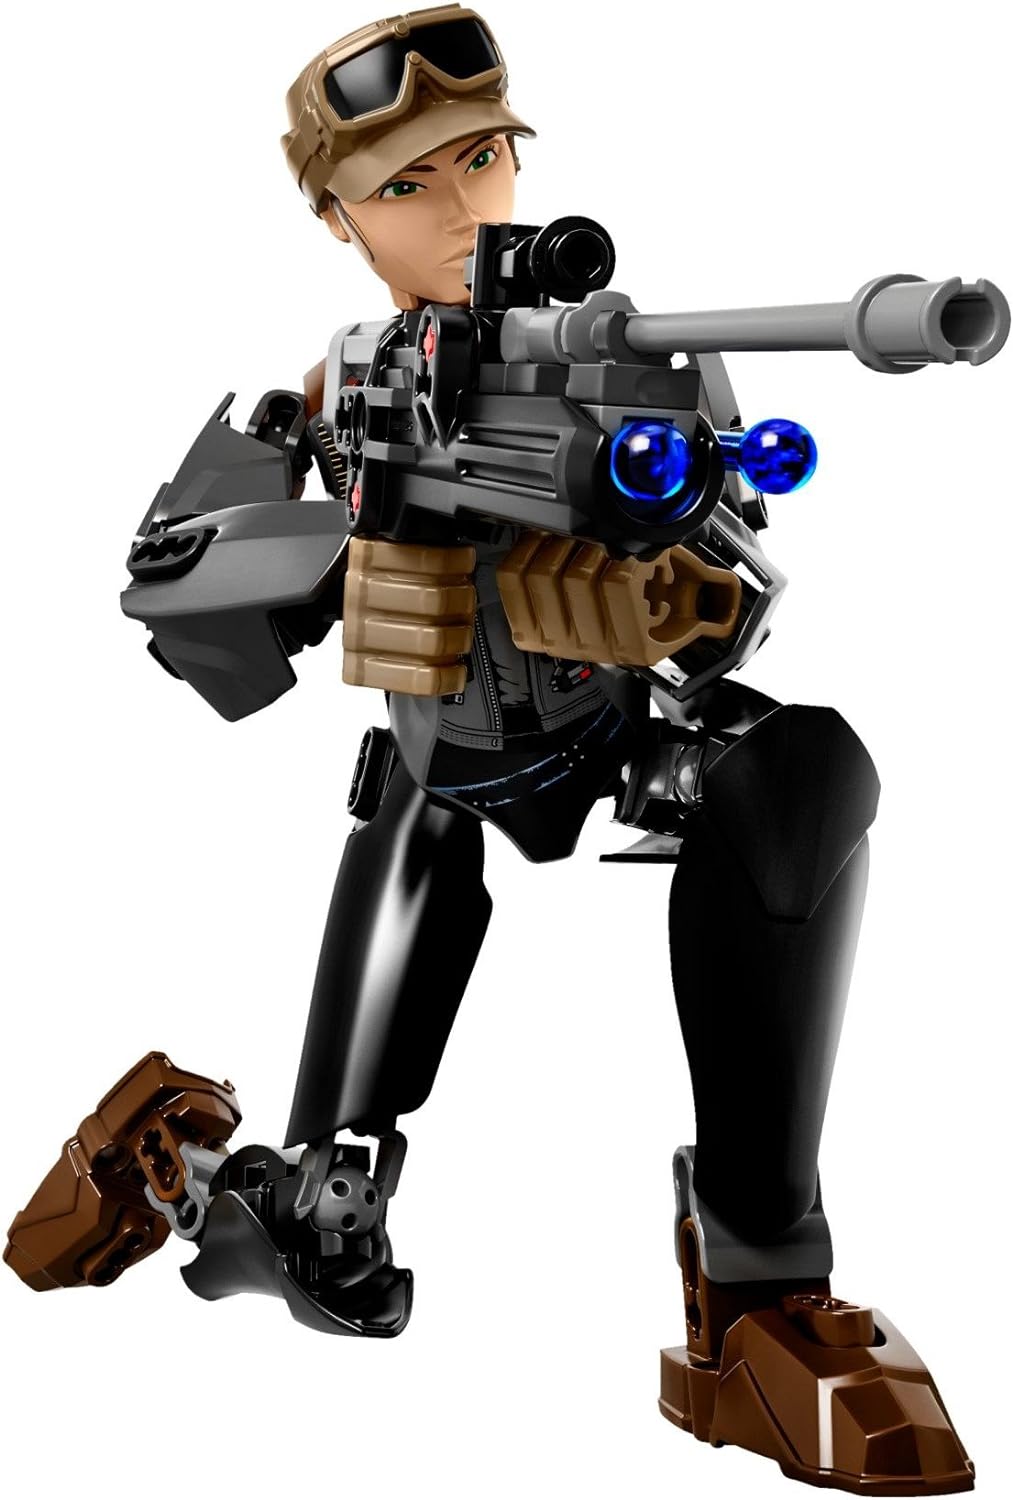 Model Kit Réplica Action Figure Sergeant Jyn Erso: Star Wars 26cm 104 Peças Lego Black Friday - MKP